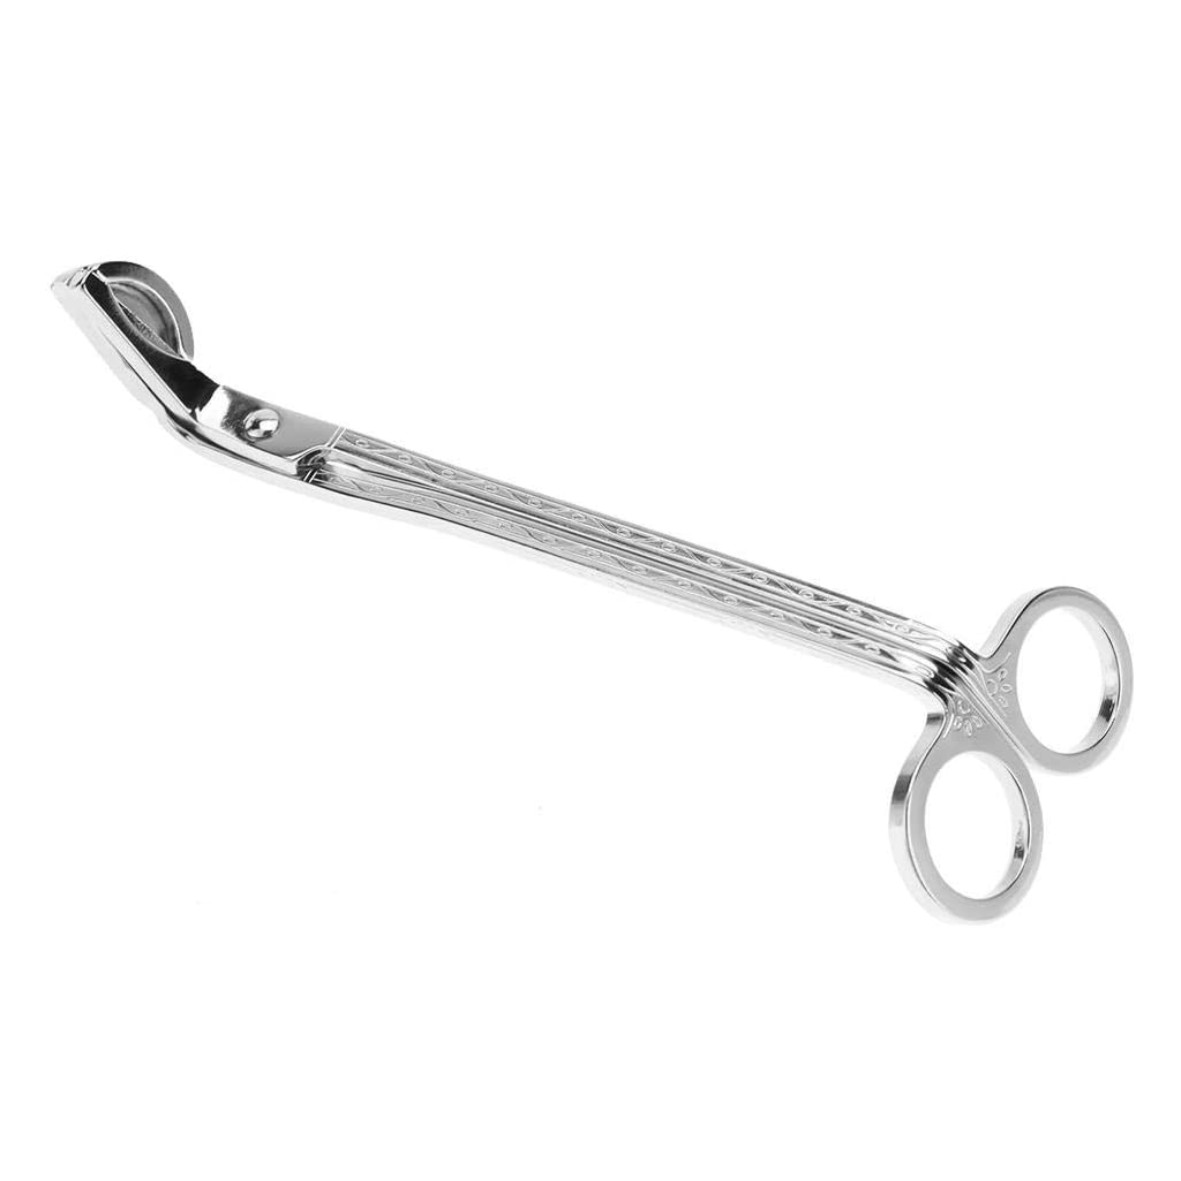 wick trimmer vs scissors